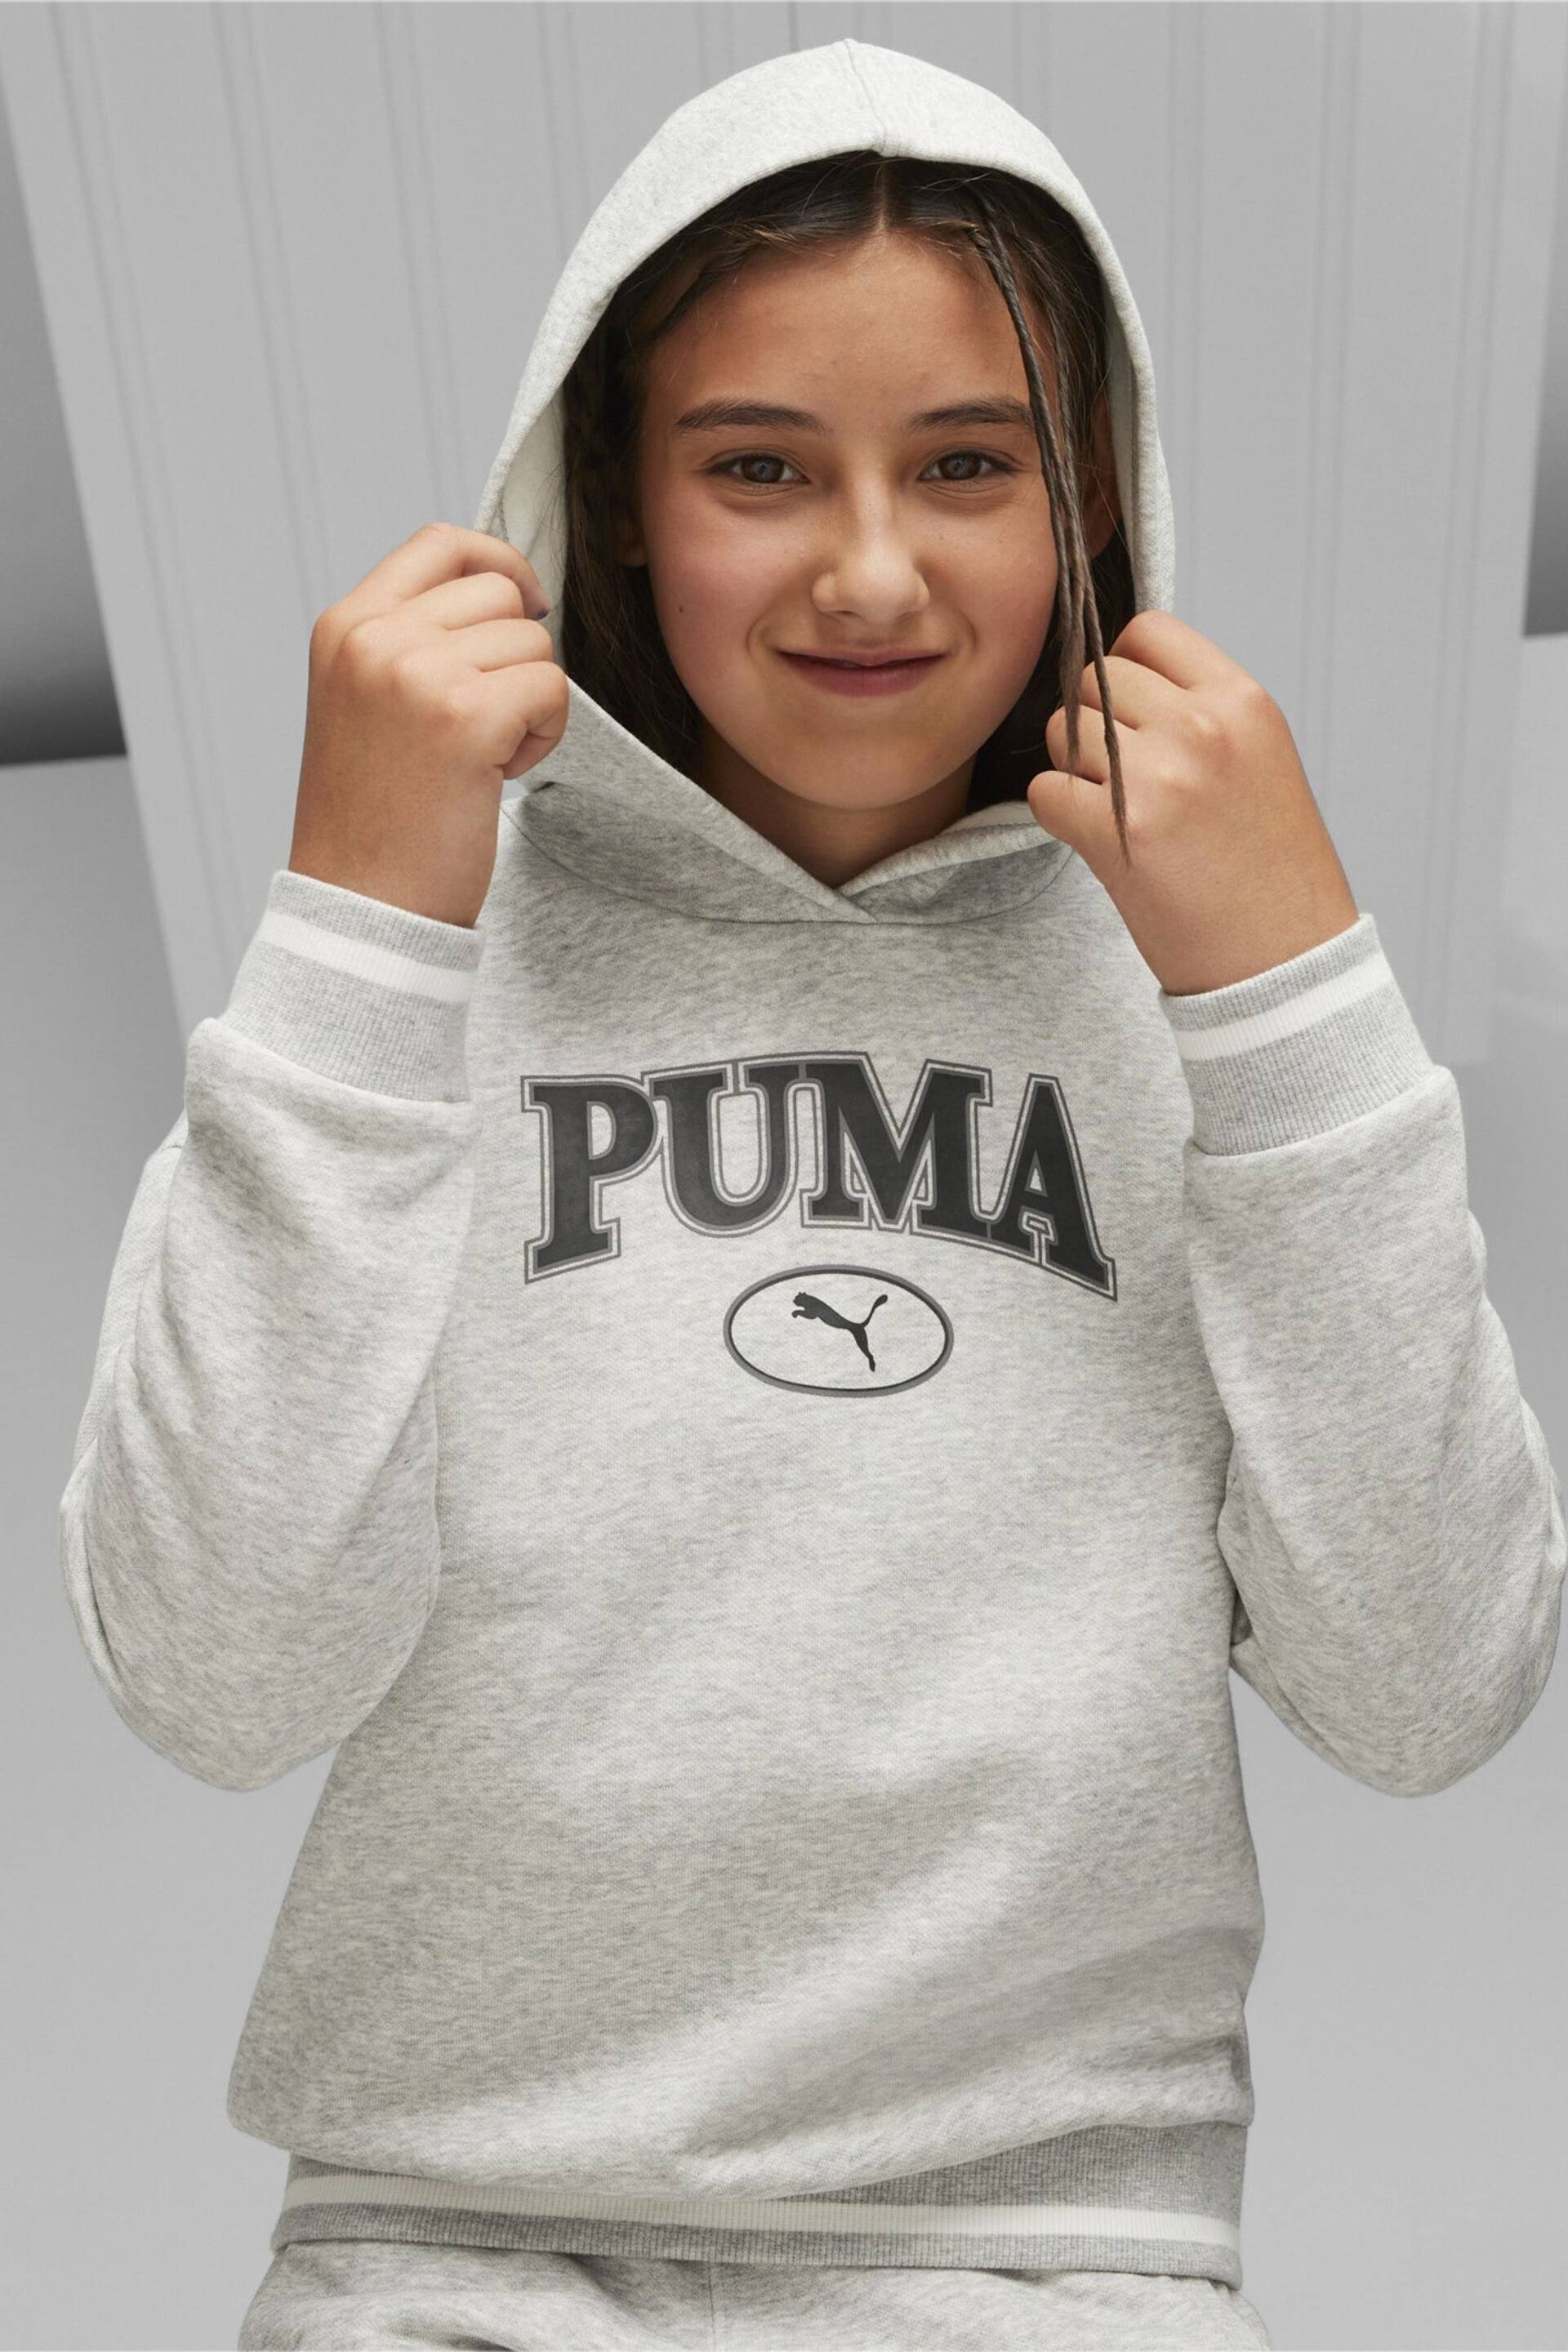 Puma Grey Youth Hoodie - Image 1 of 5